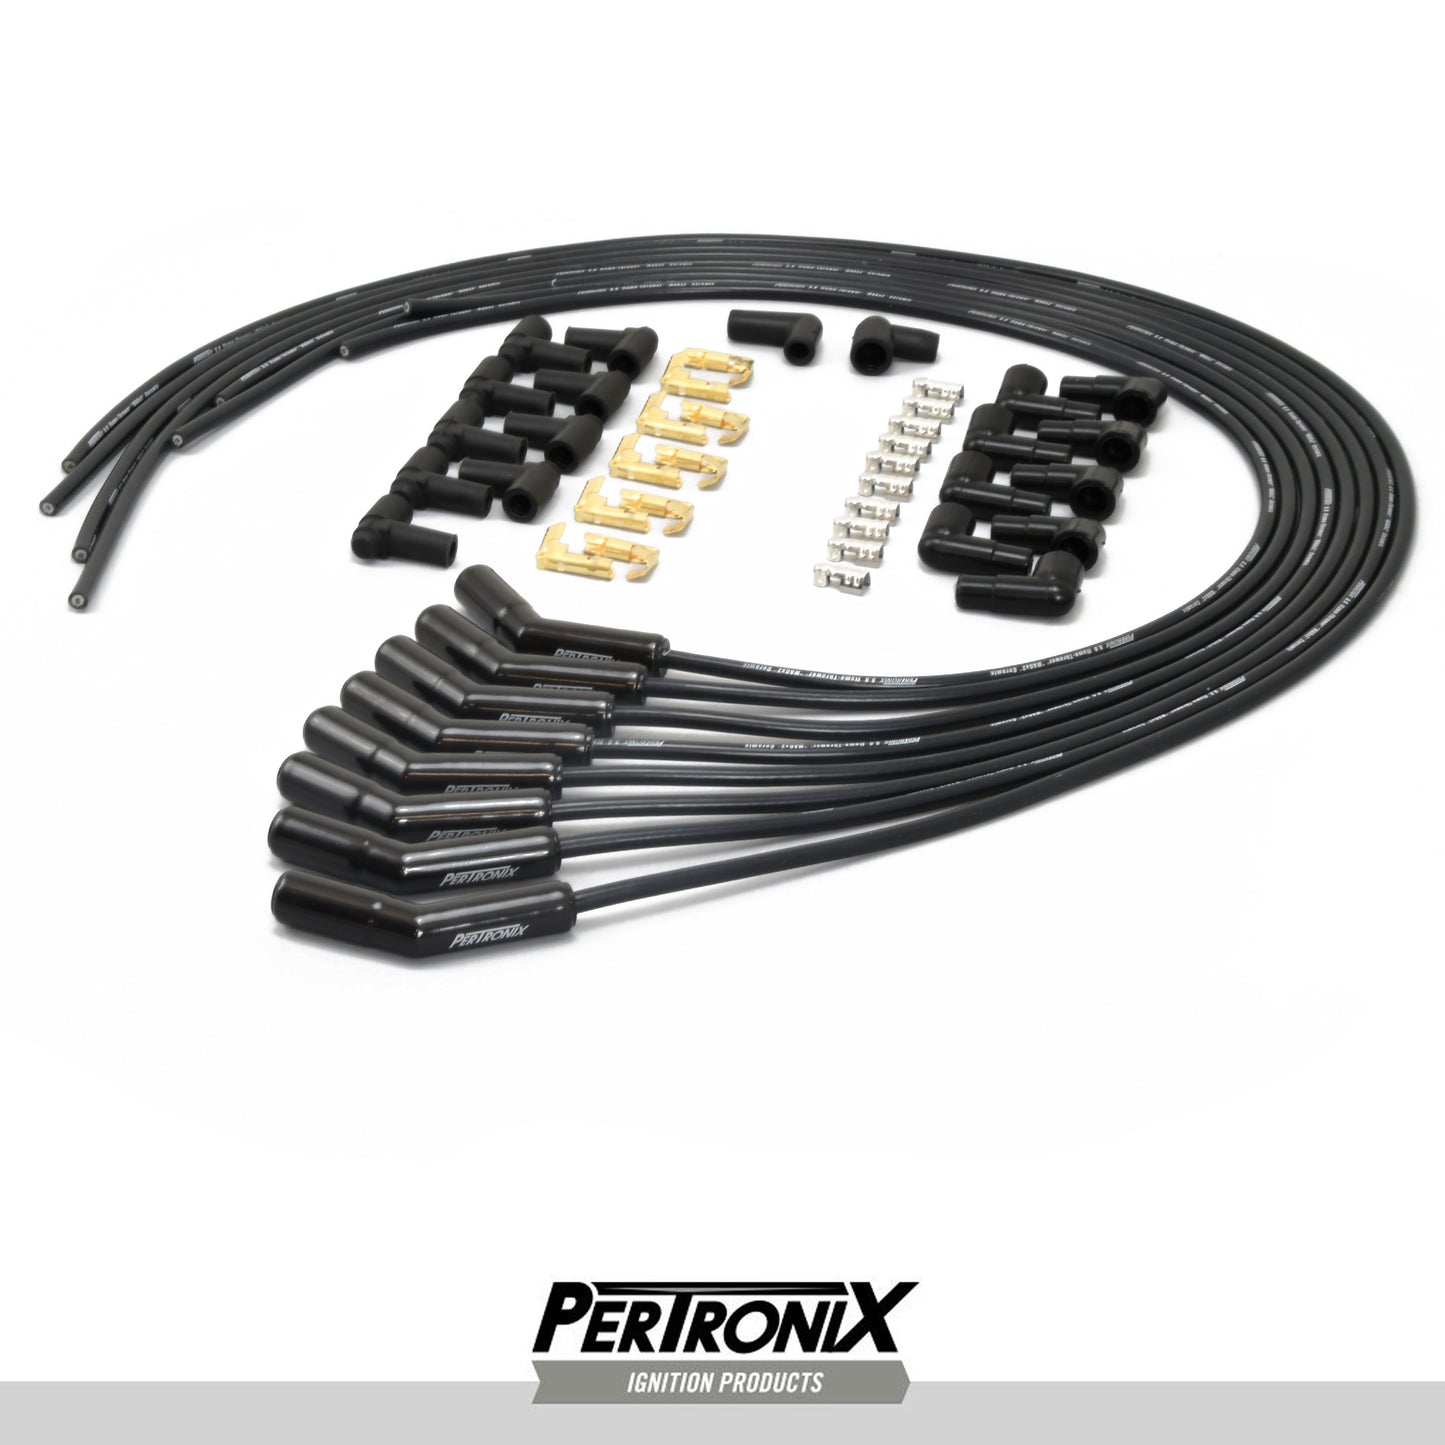 PerTronix 828215HT Flame Thrower Spark Plug Wires Black Ceramic